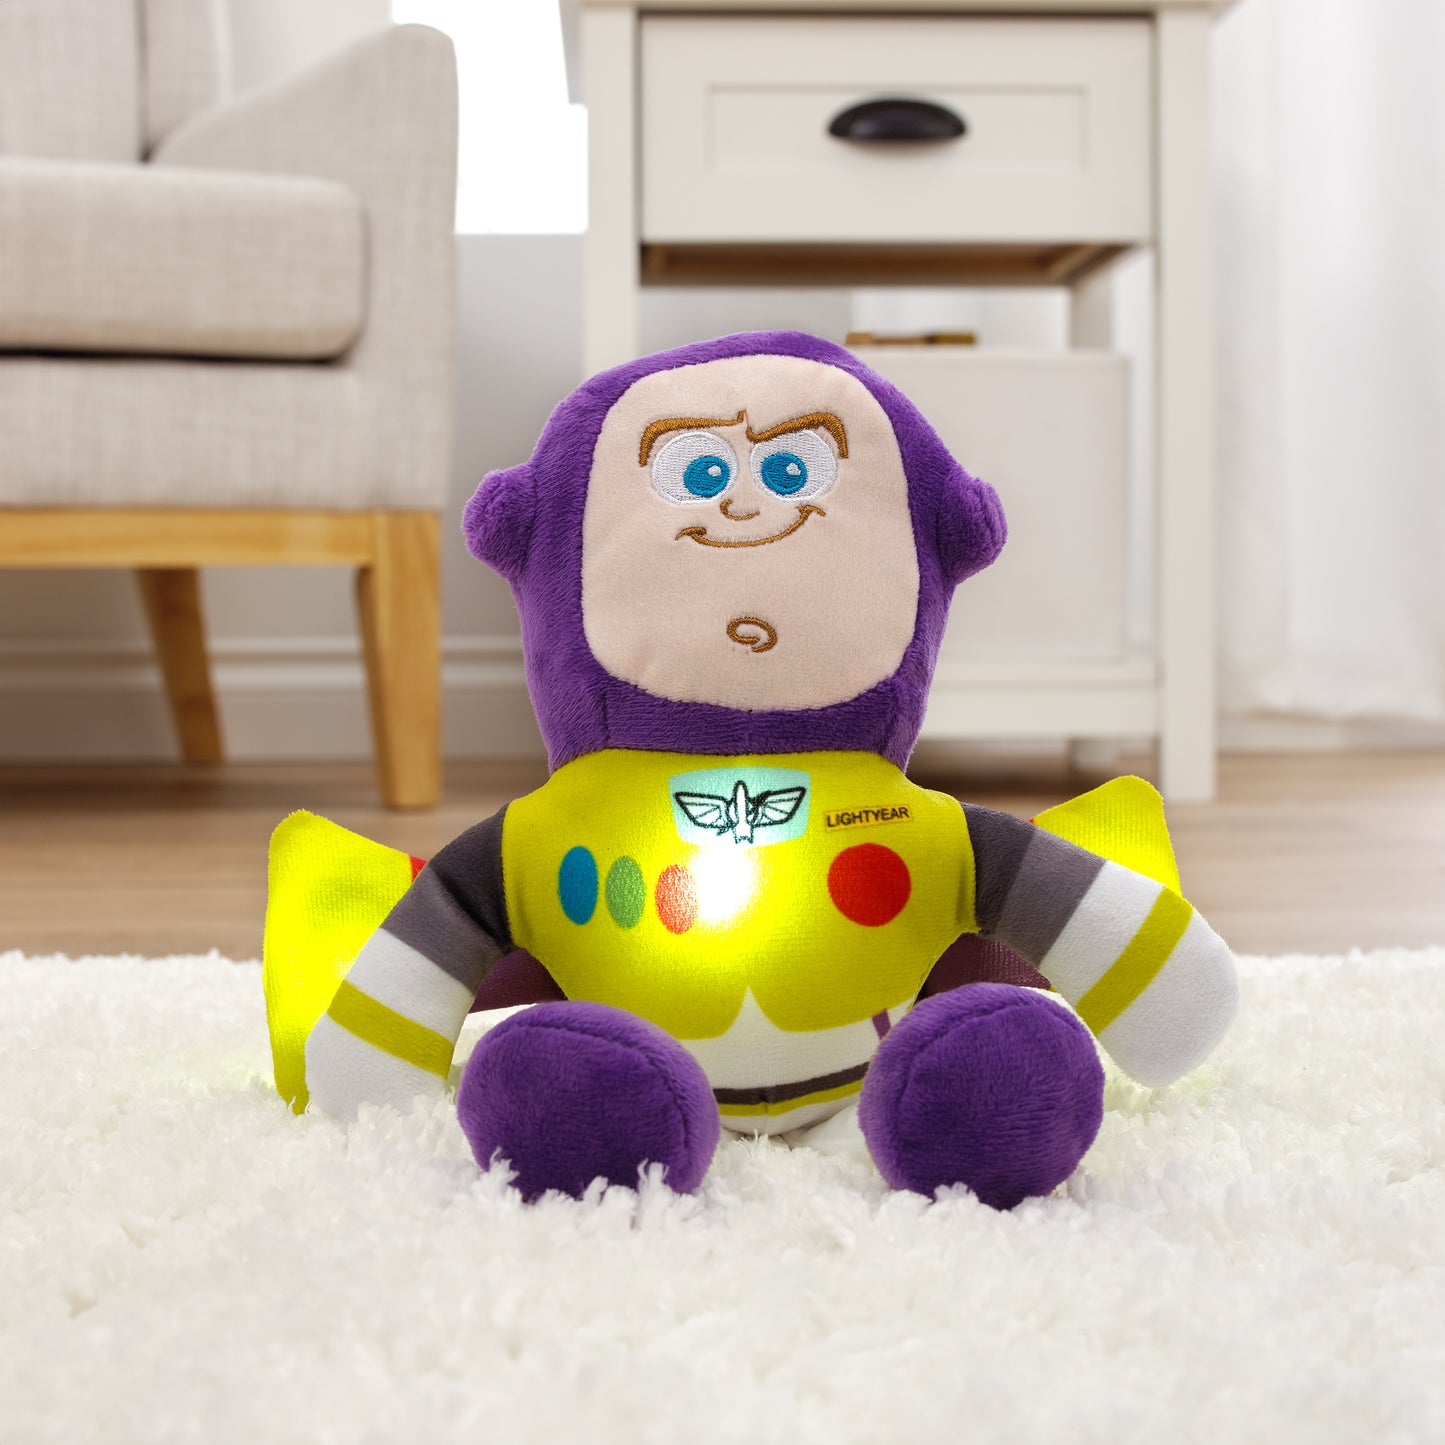 Disney Toy Story Buzz Lightyear Light Up Plush Character